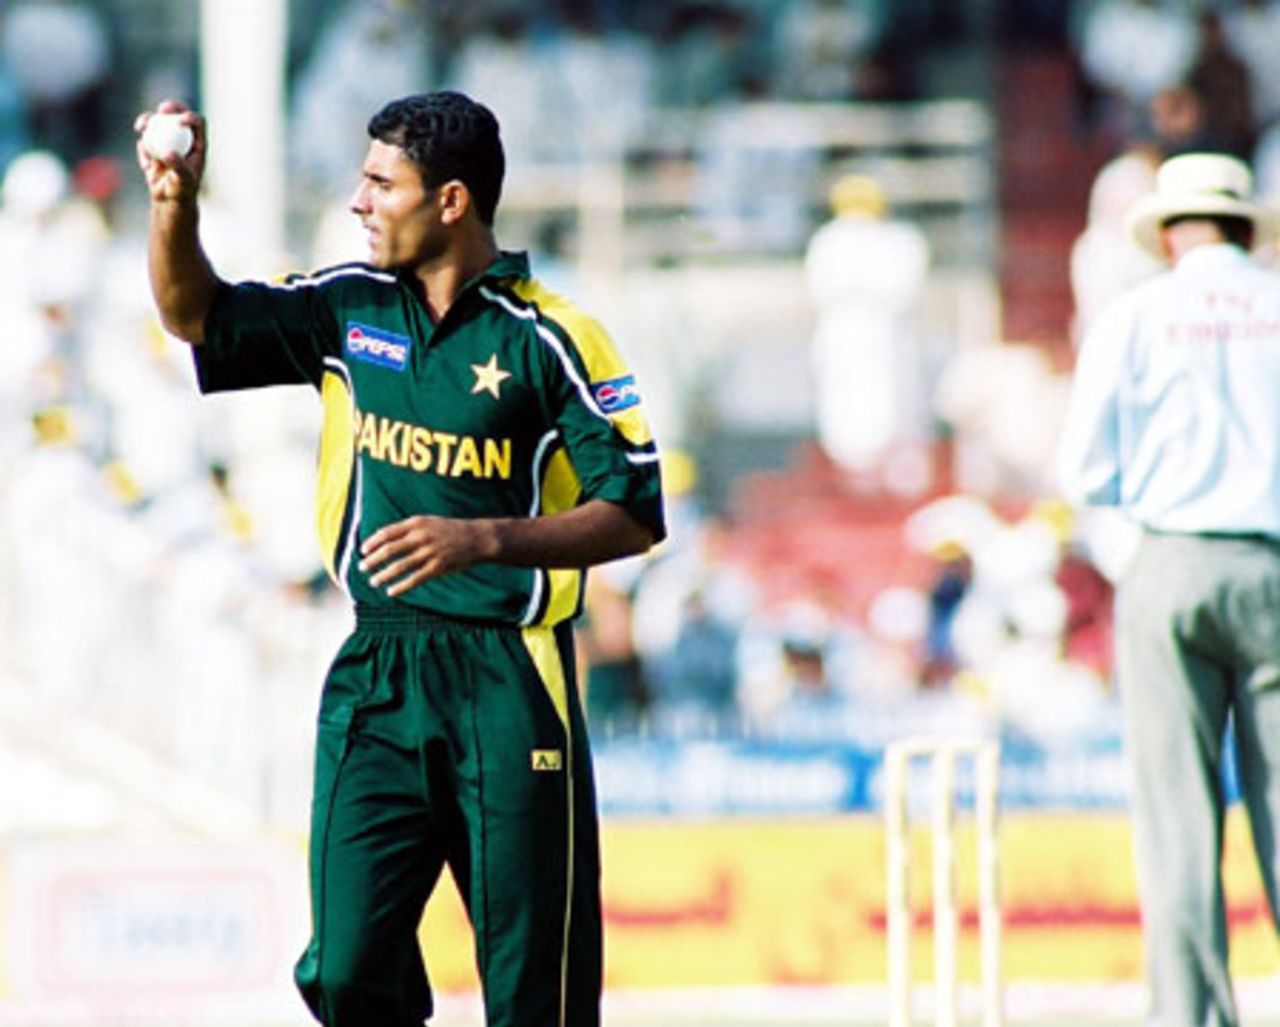 Abdul Razzaq going to his mark, 1st Match: Pakistan v Zimbabwe, Cherry Blossom Sharjah Cup, 3 April 2003